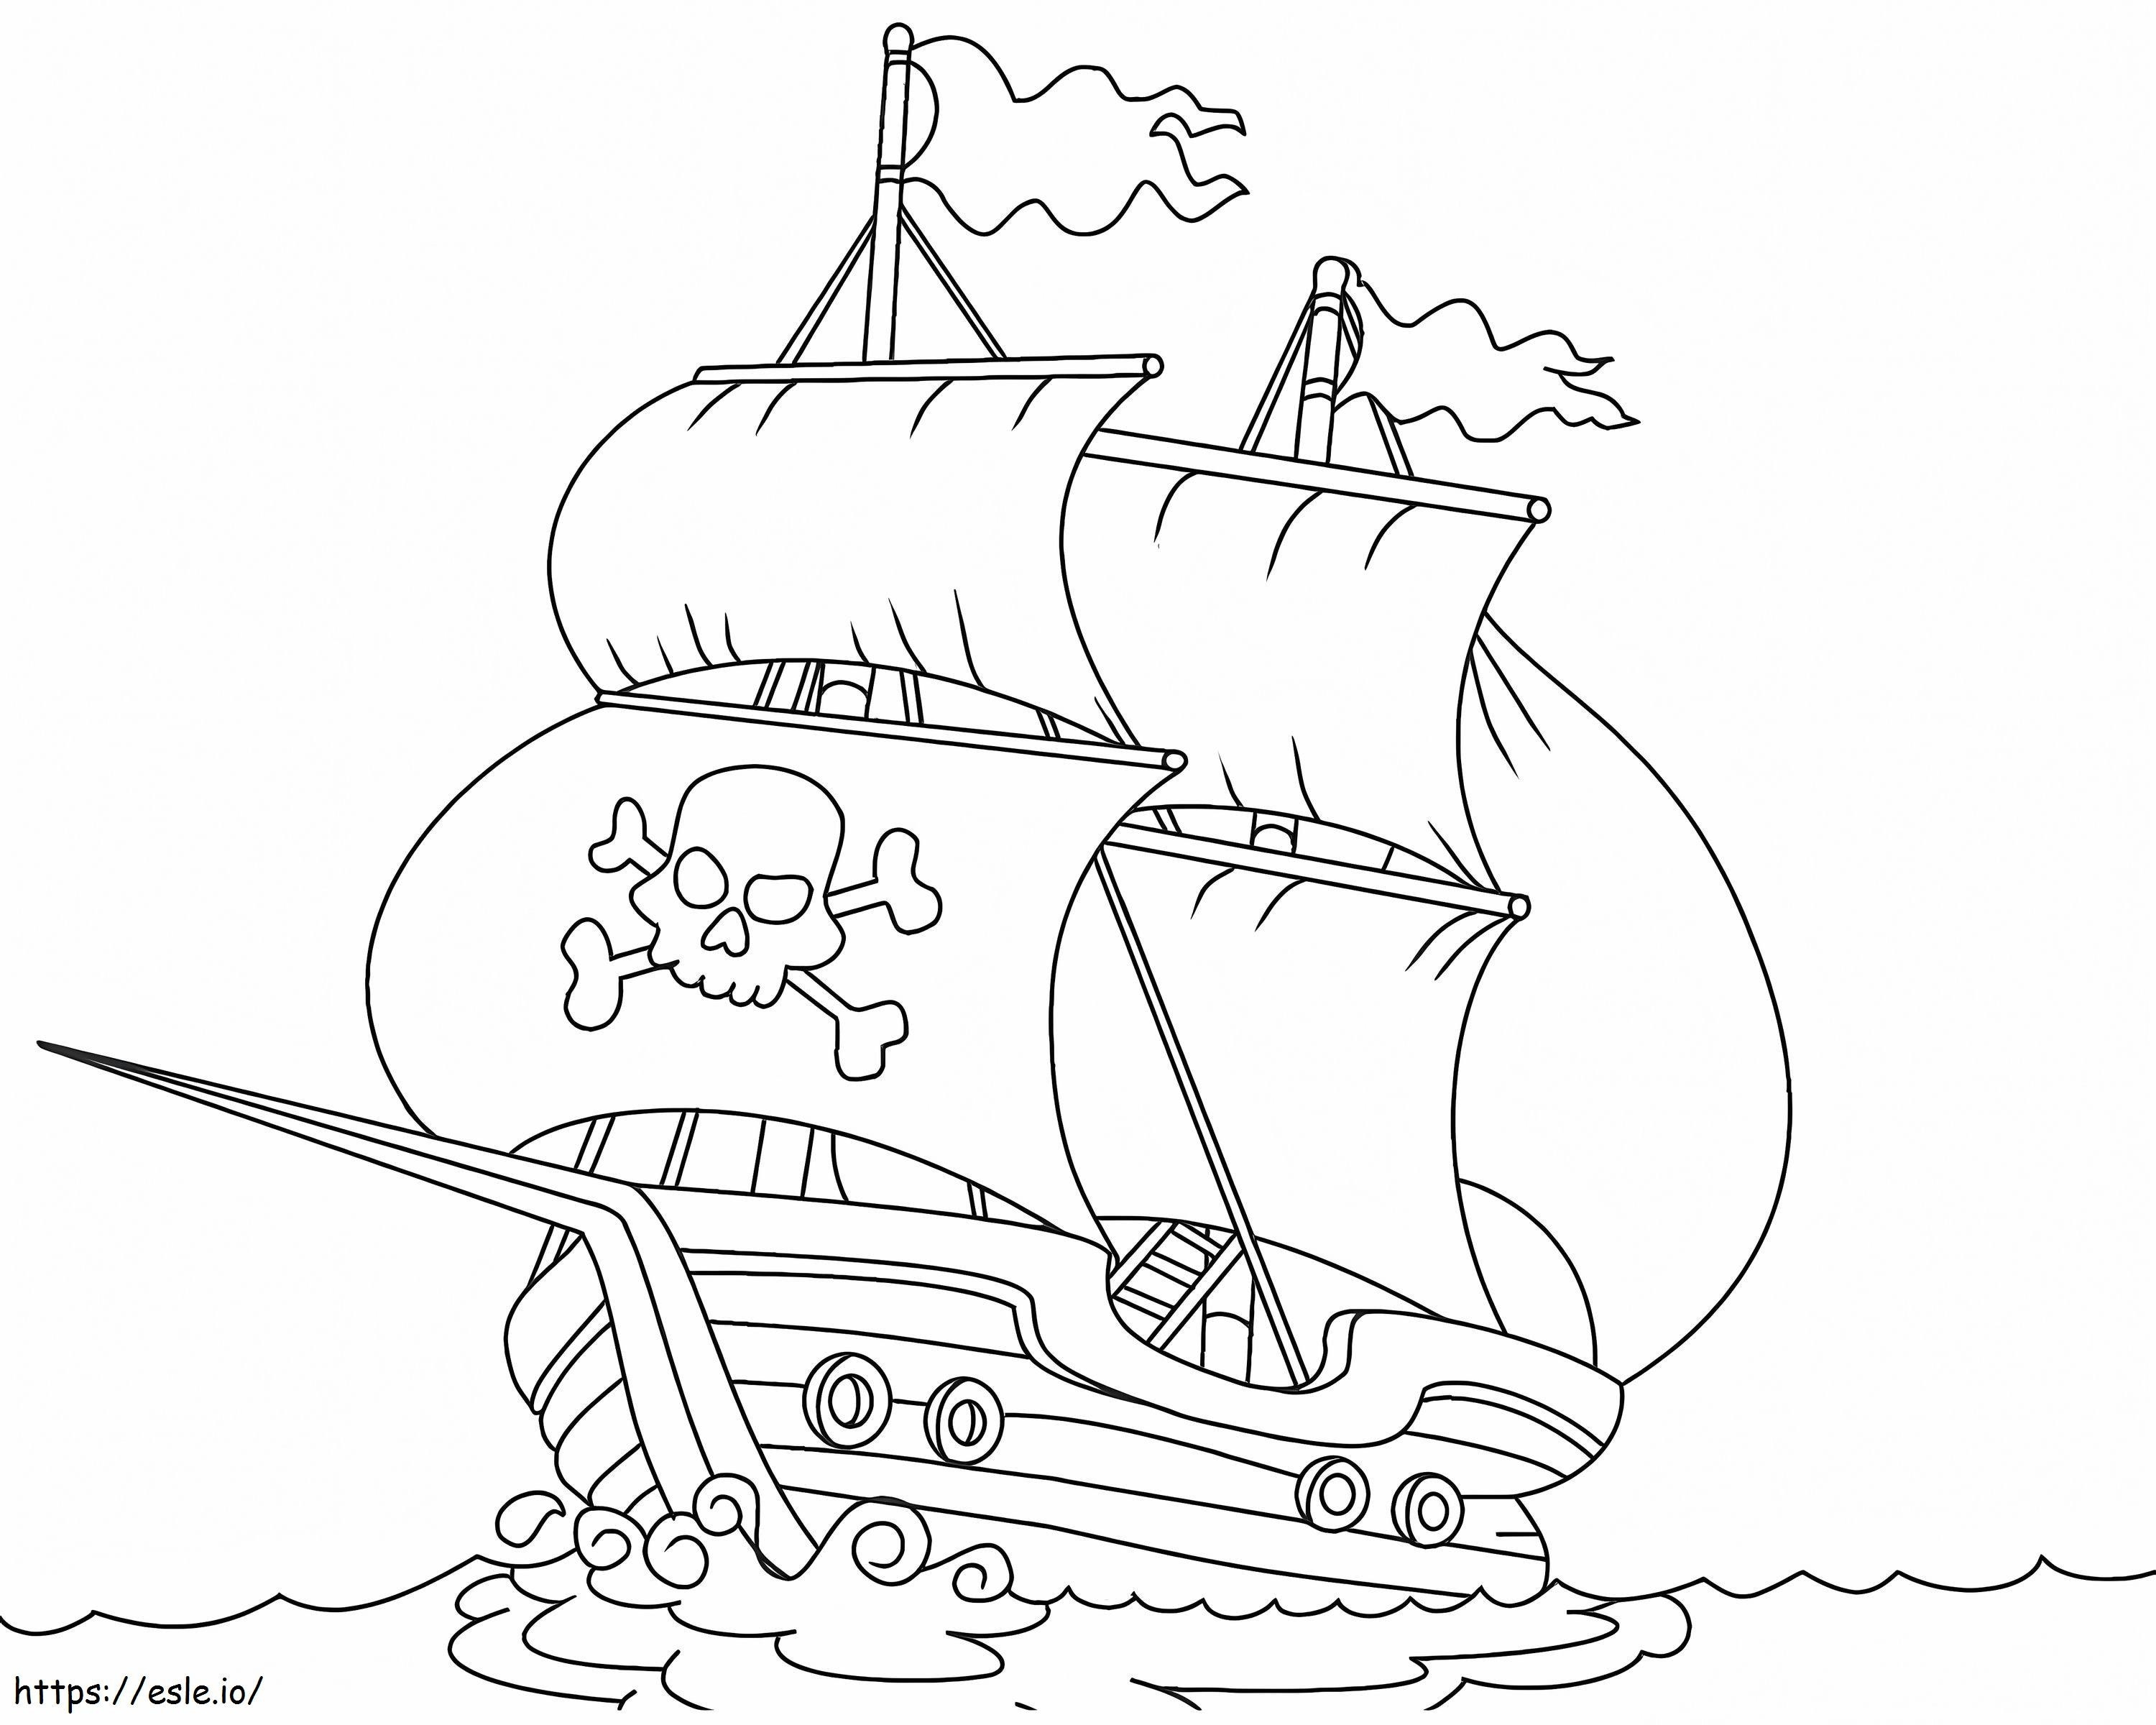 Grande navio pirata para colorir